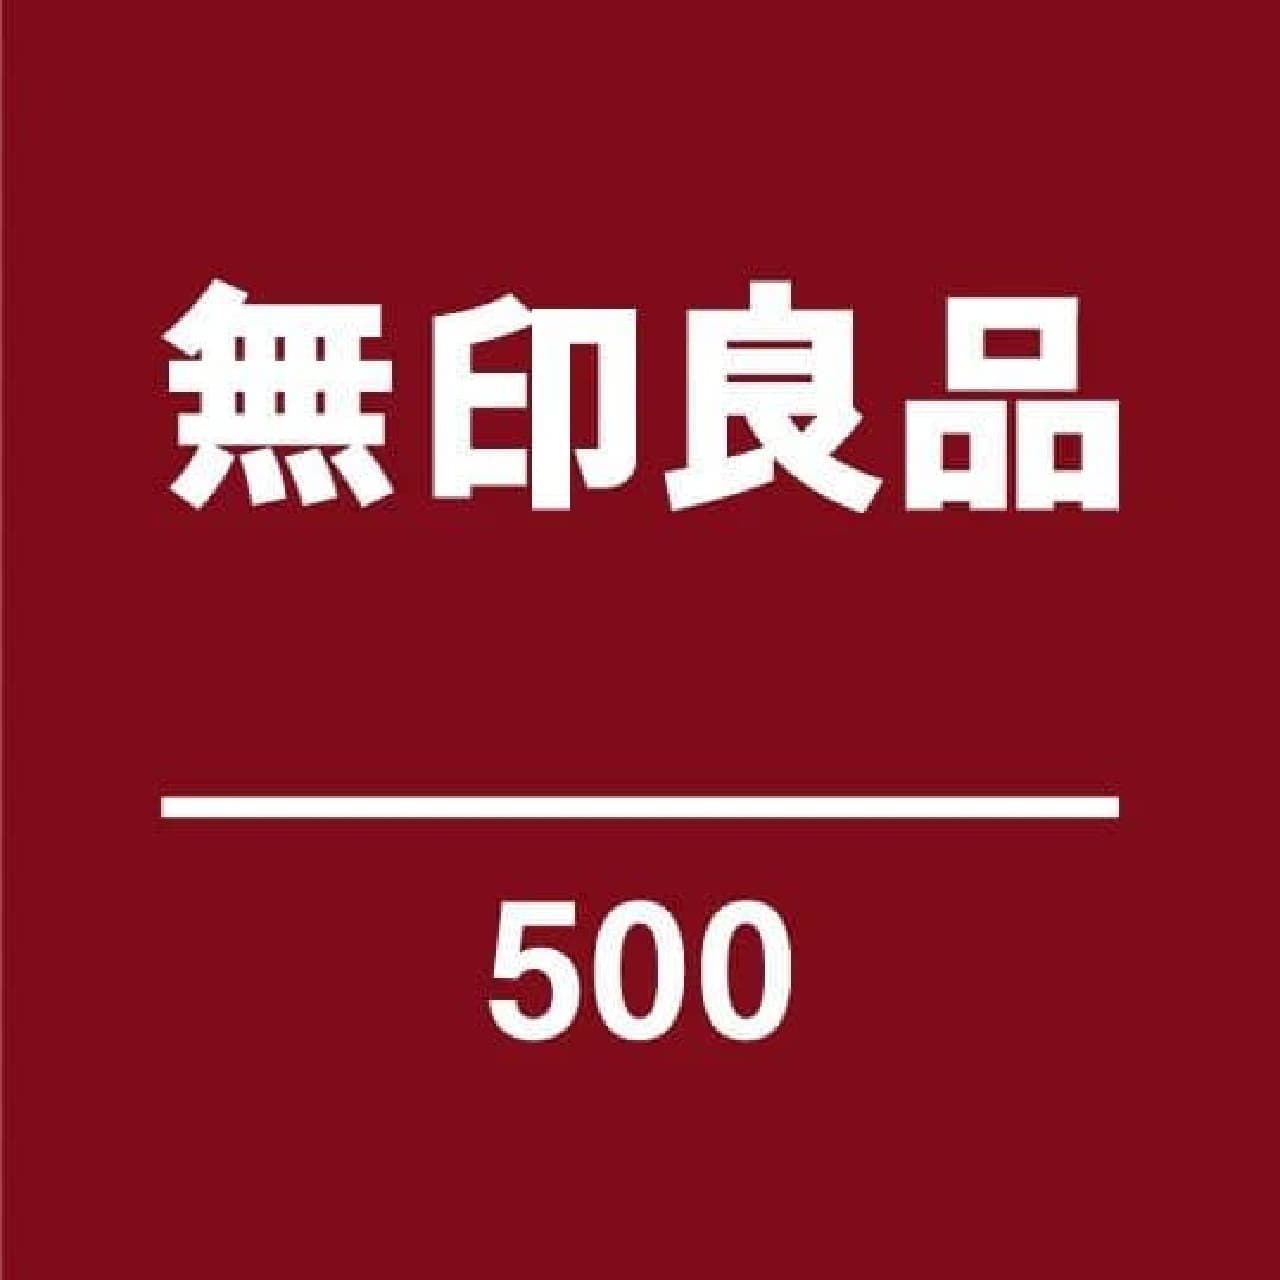 MUJI 500 Atrevi Mitaka